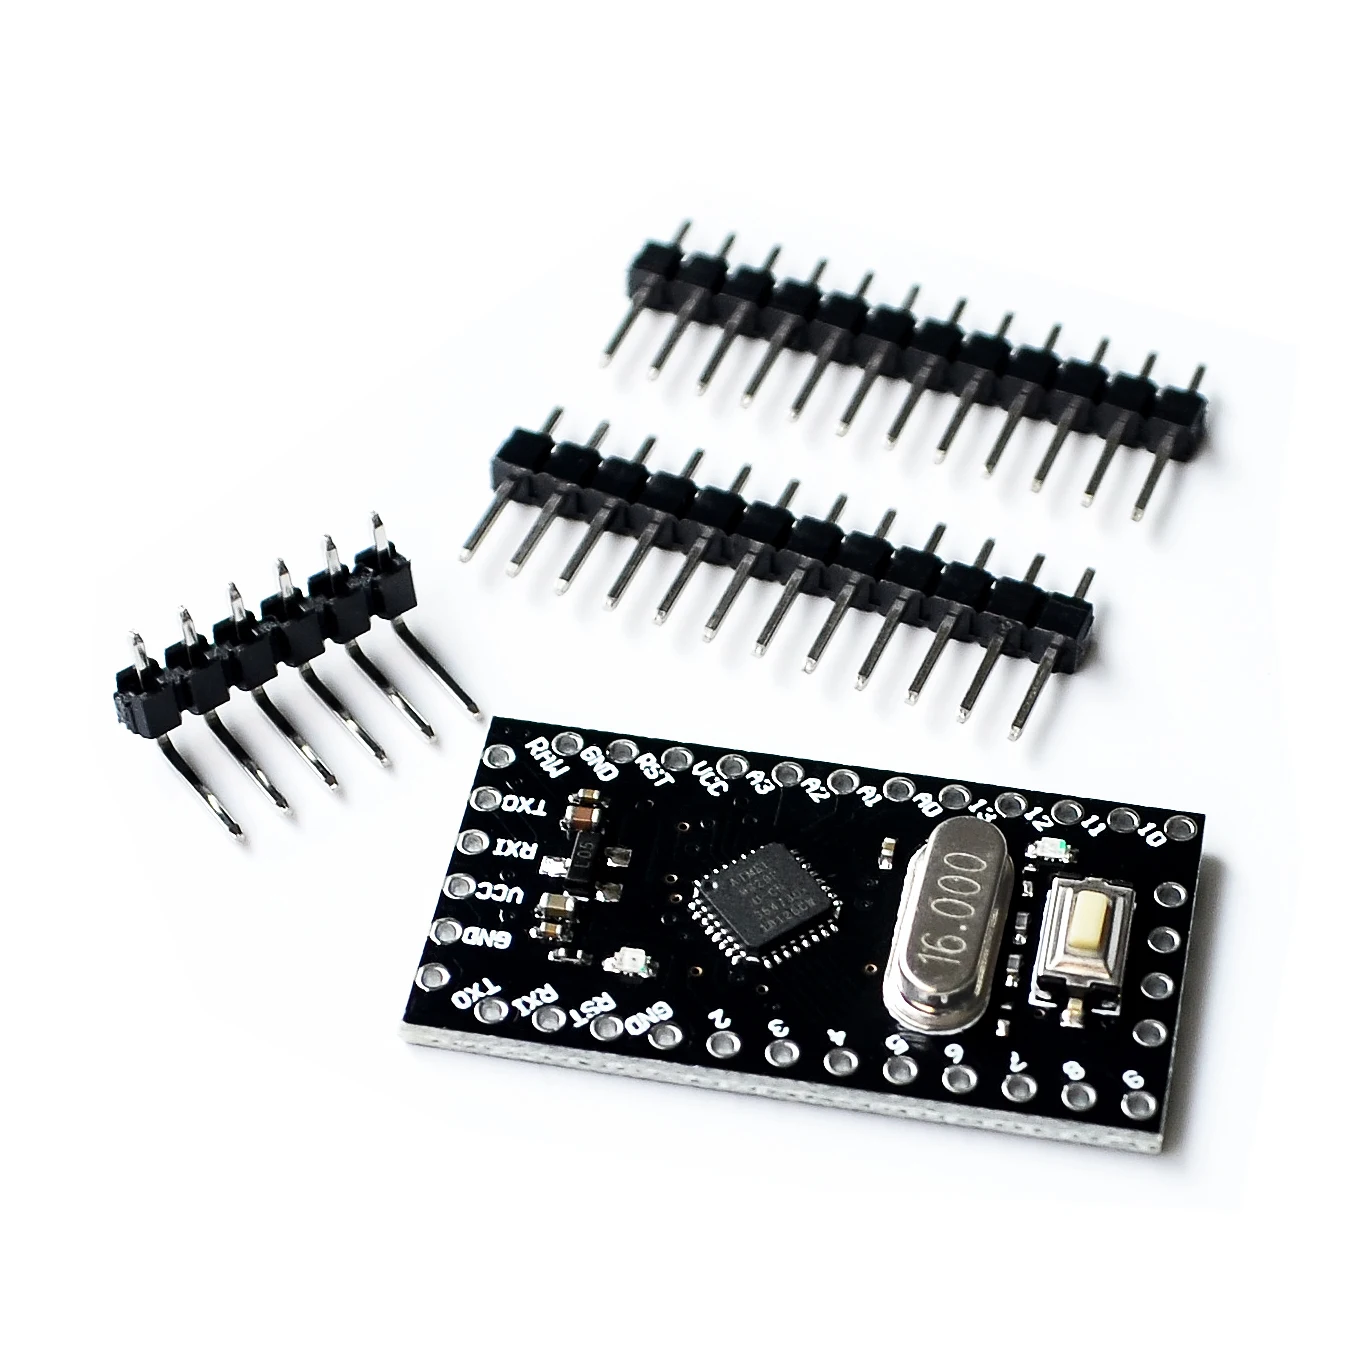 Pro Mini ATmega168 5V 16MHz Compatible for Arduino Nano 